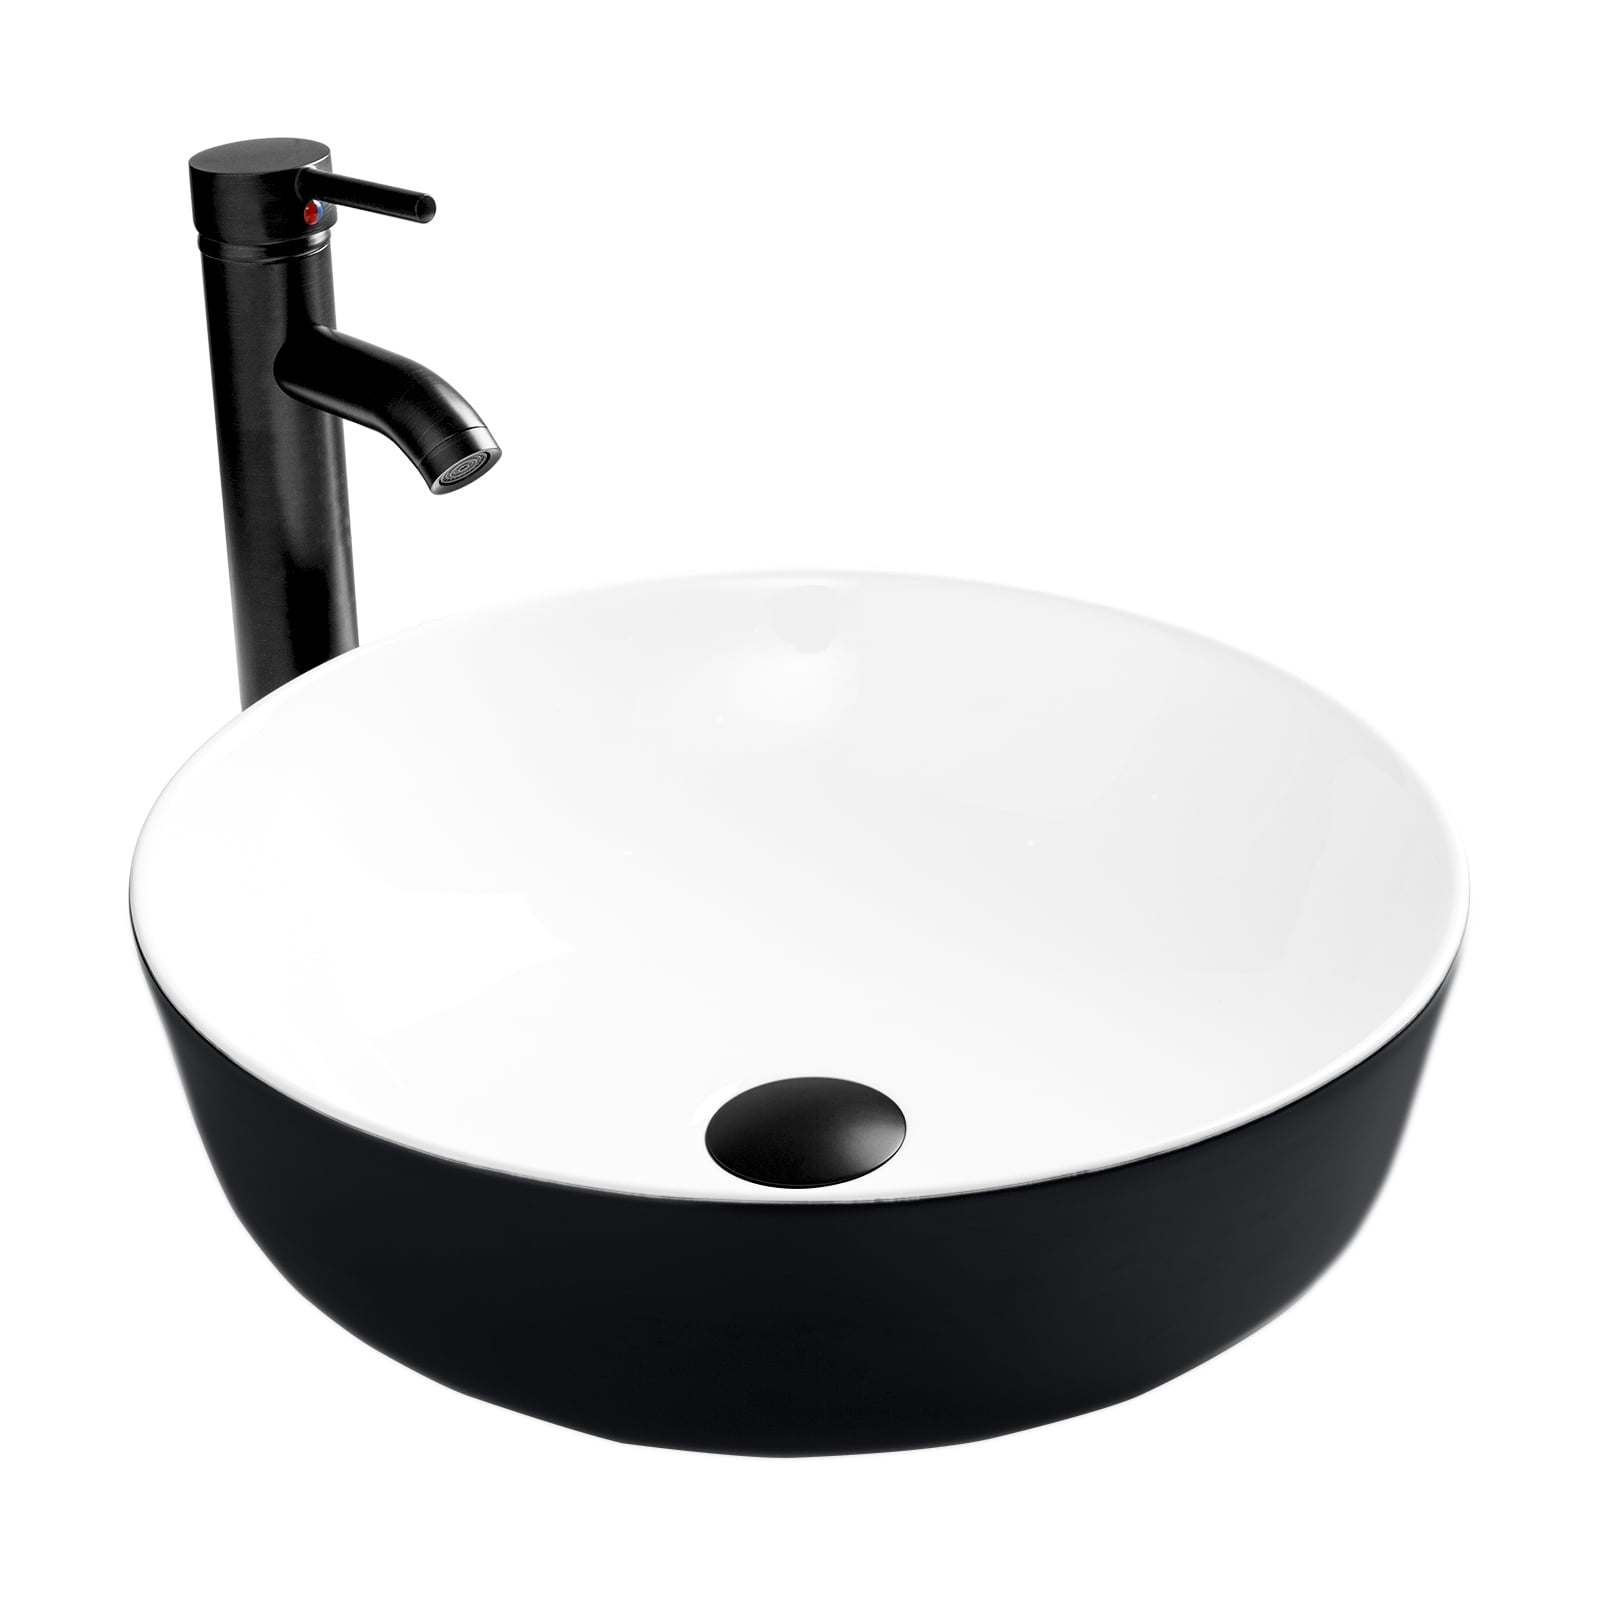 FULLWATT Black and White Ceramic Bathroom Sink, Above Counter Porcelain ...